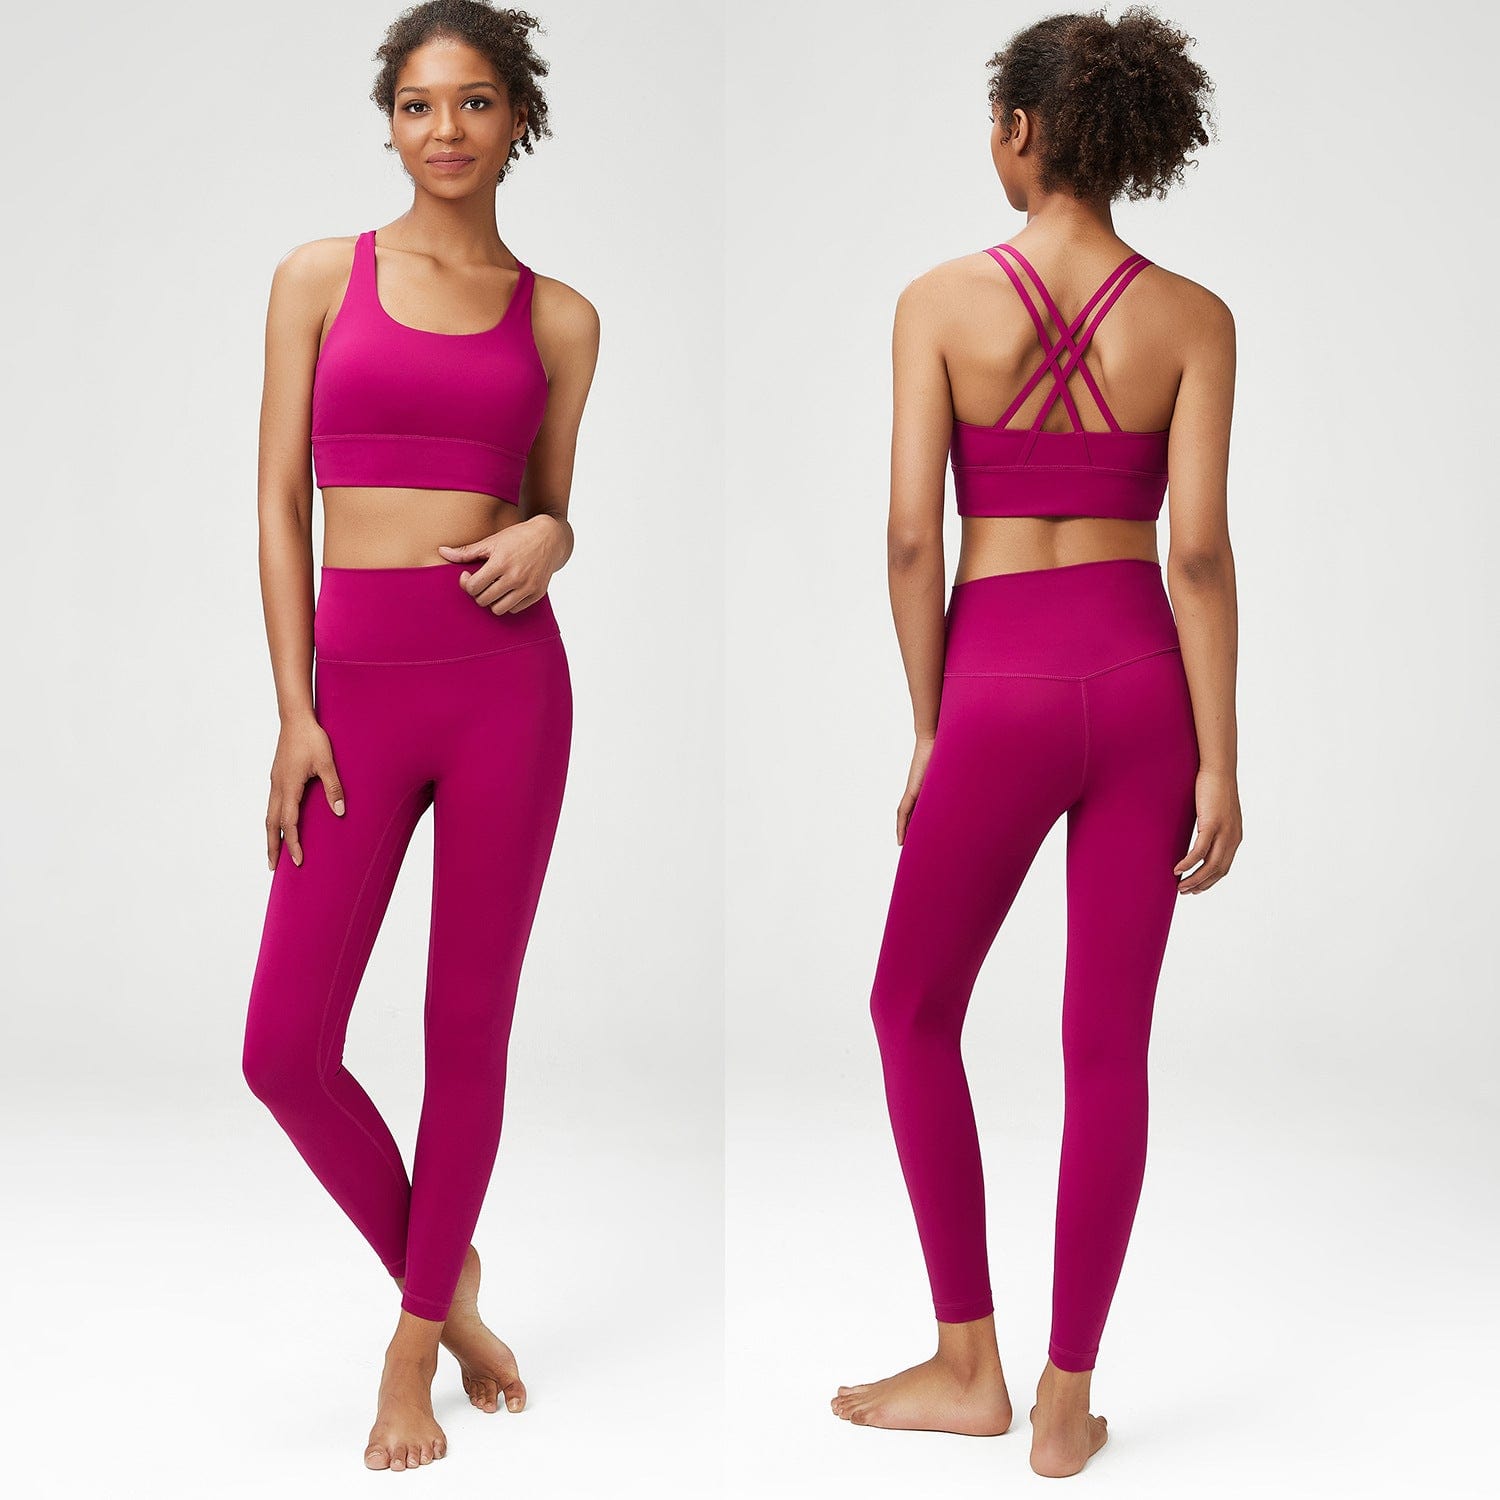 Lululemon floral pink leggings gym athletic yoga high waist 10 crop